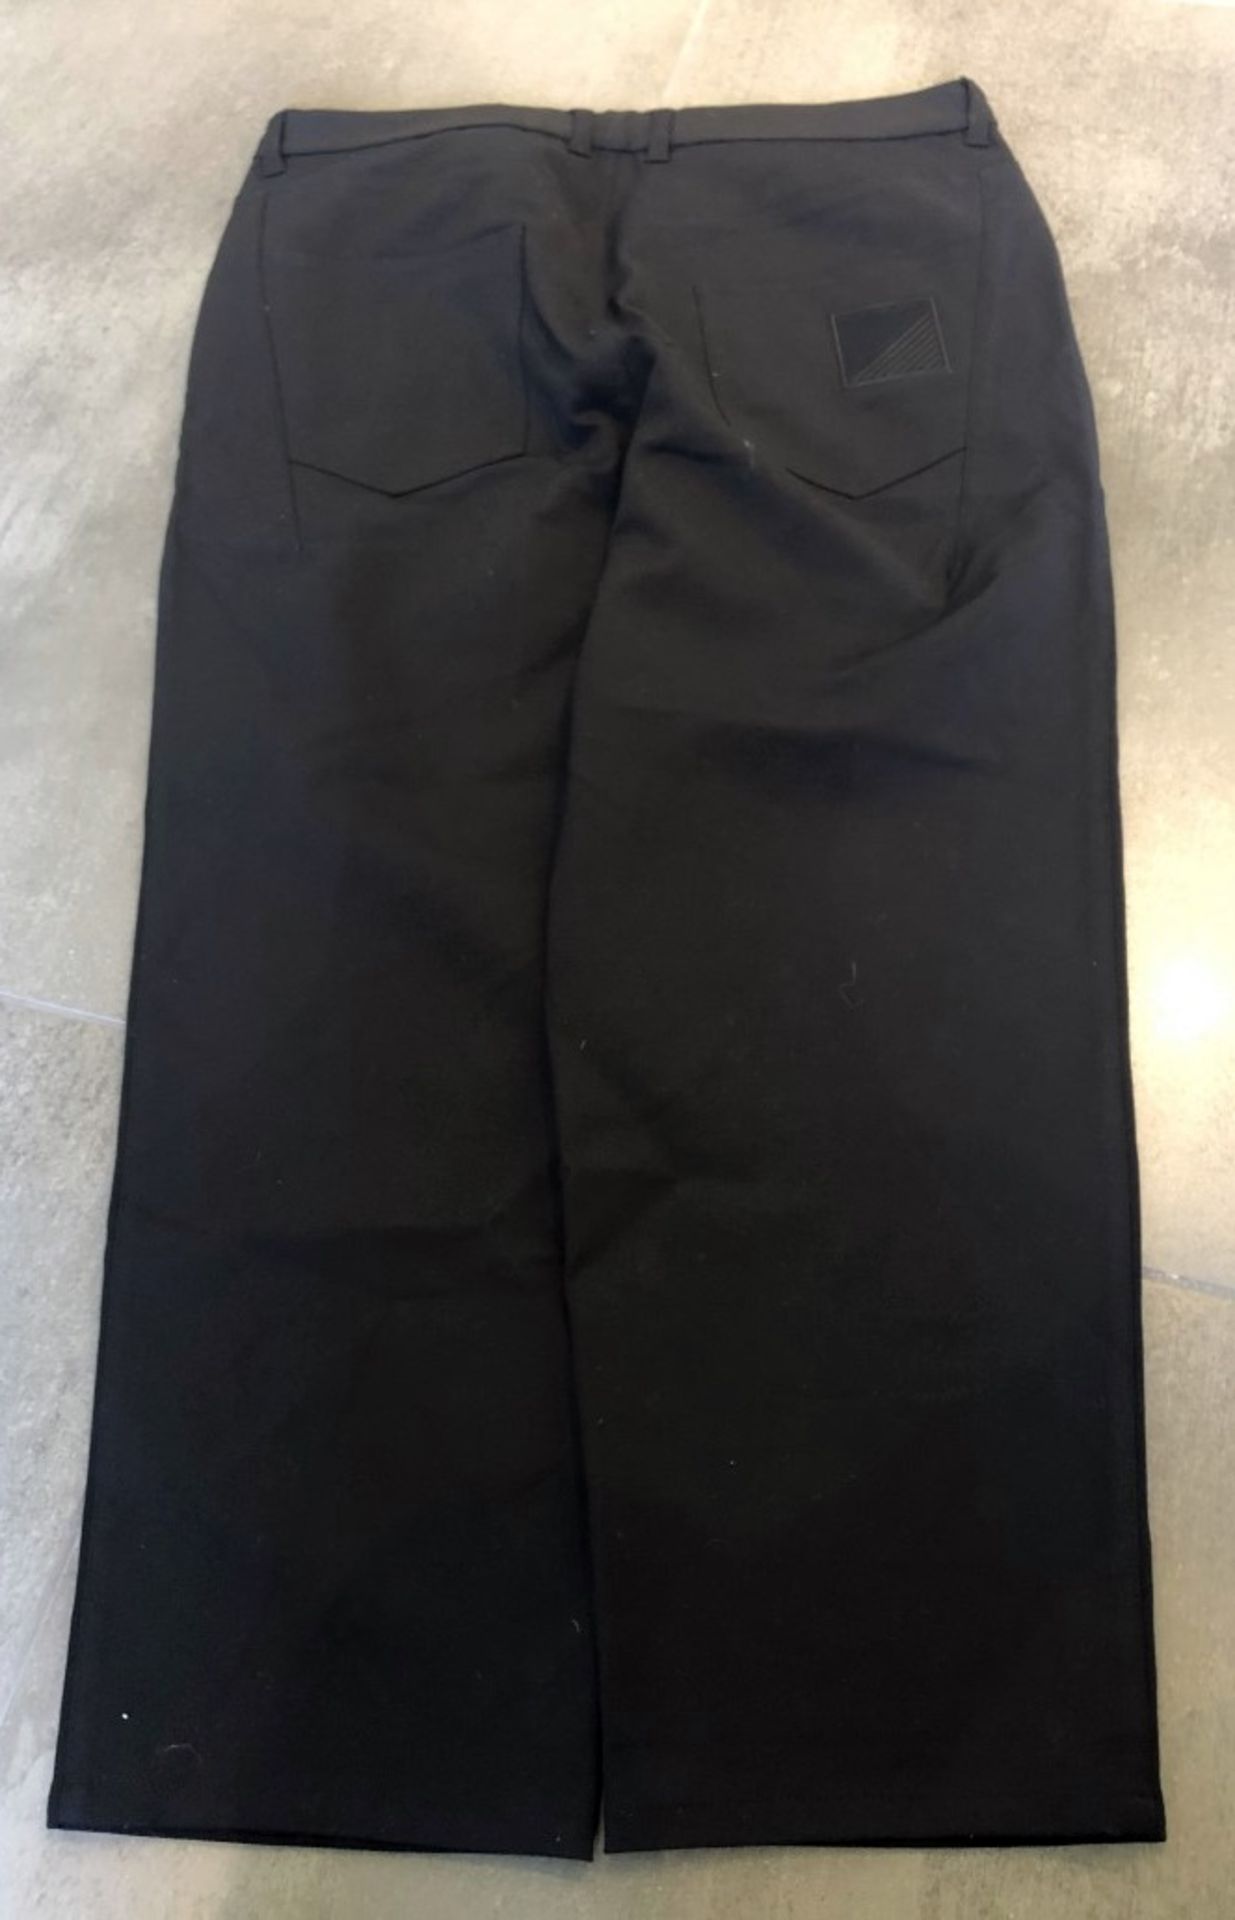 1 x Pair Of Men's Genuine Blackbarrett By Neil Barrett Trousers In Black - Size (EU/UK): L/L - - Image 4 of 6